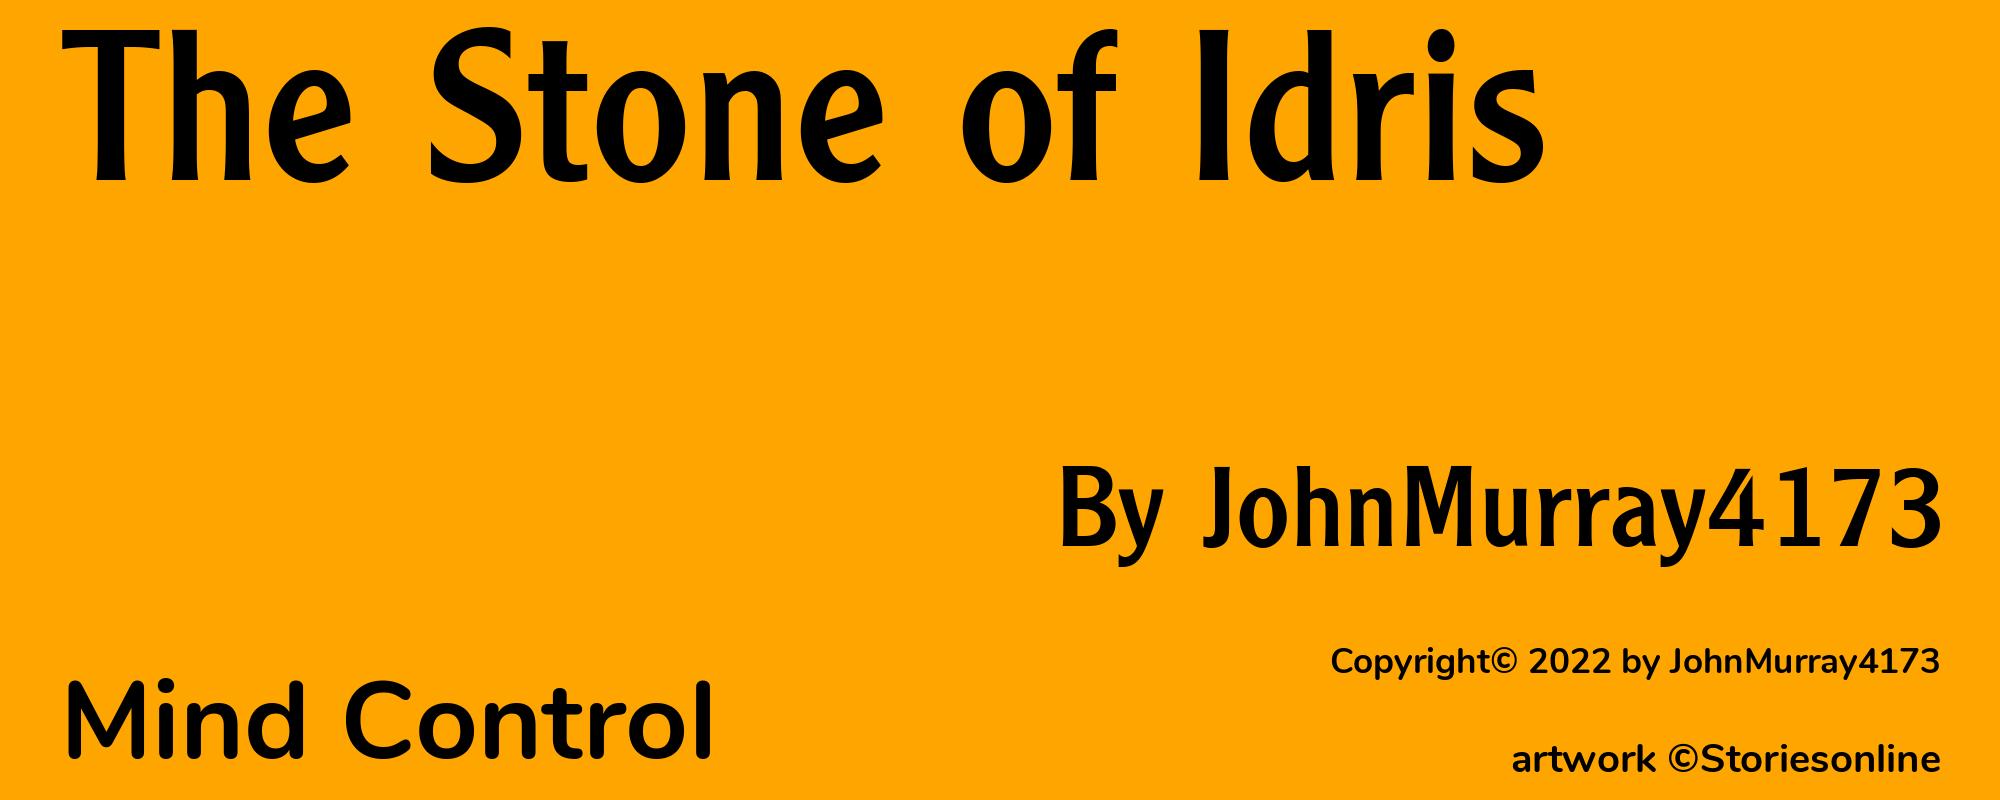 The Stone of Idris - Cover